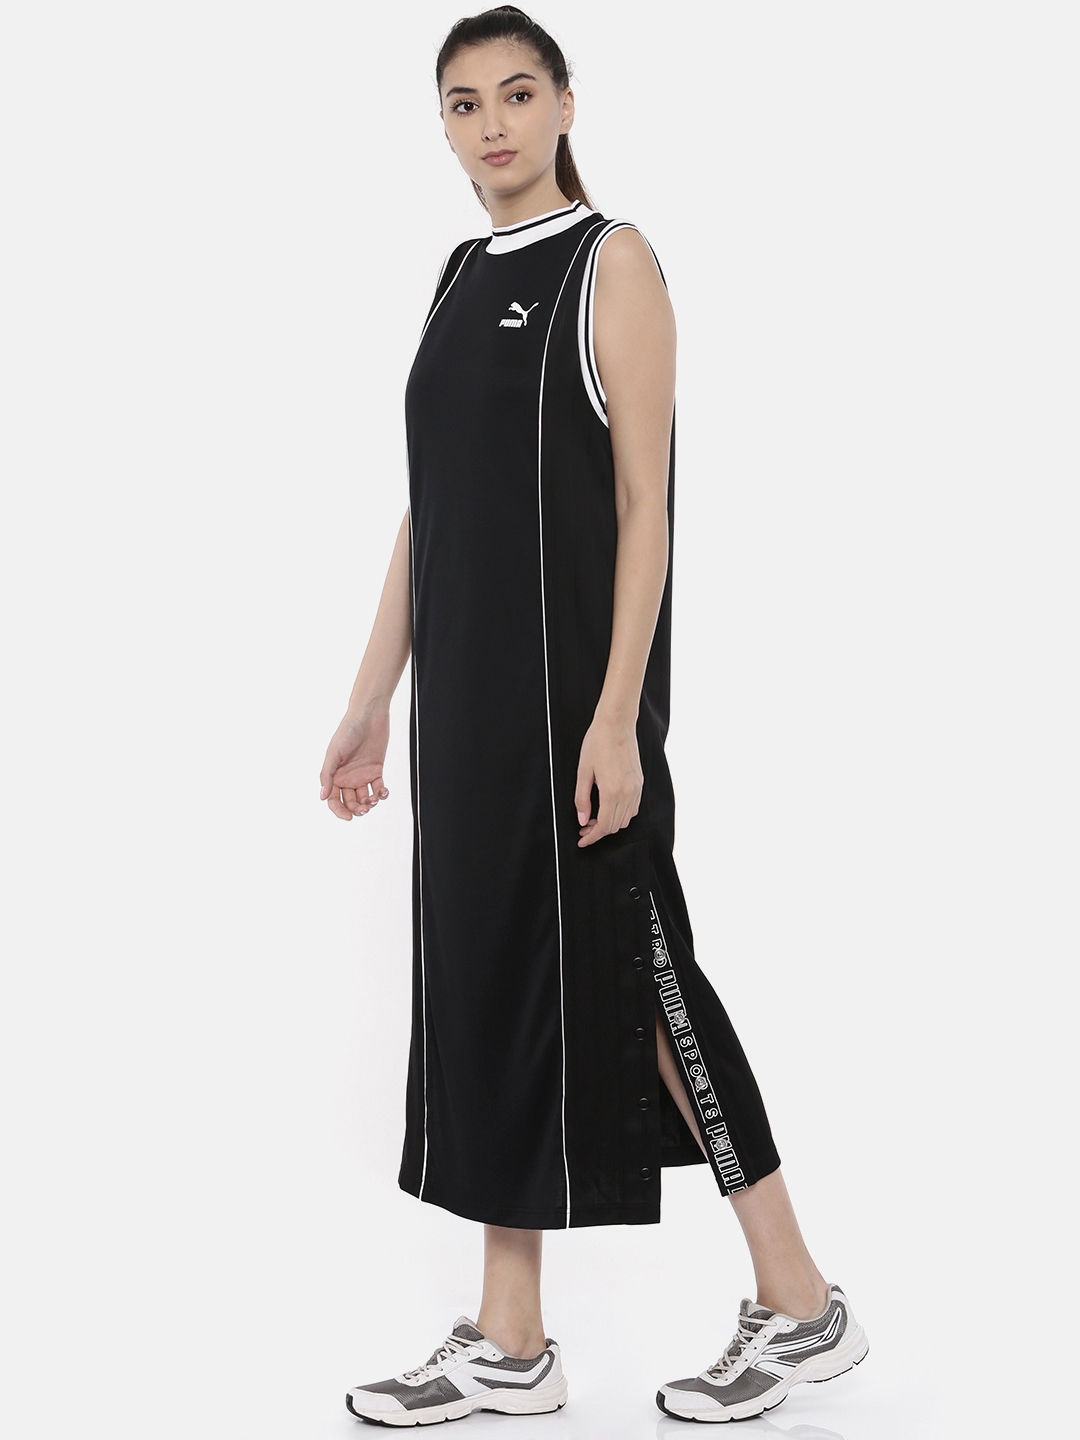 Buy Puma Womens Polyester TShirt KneeLength Dress 53784734Sunset  GlowS at Amazonin